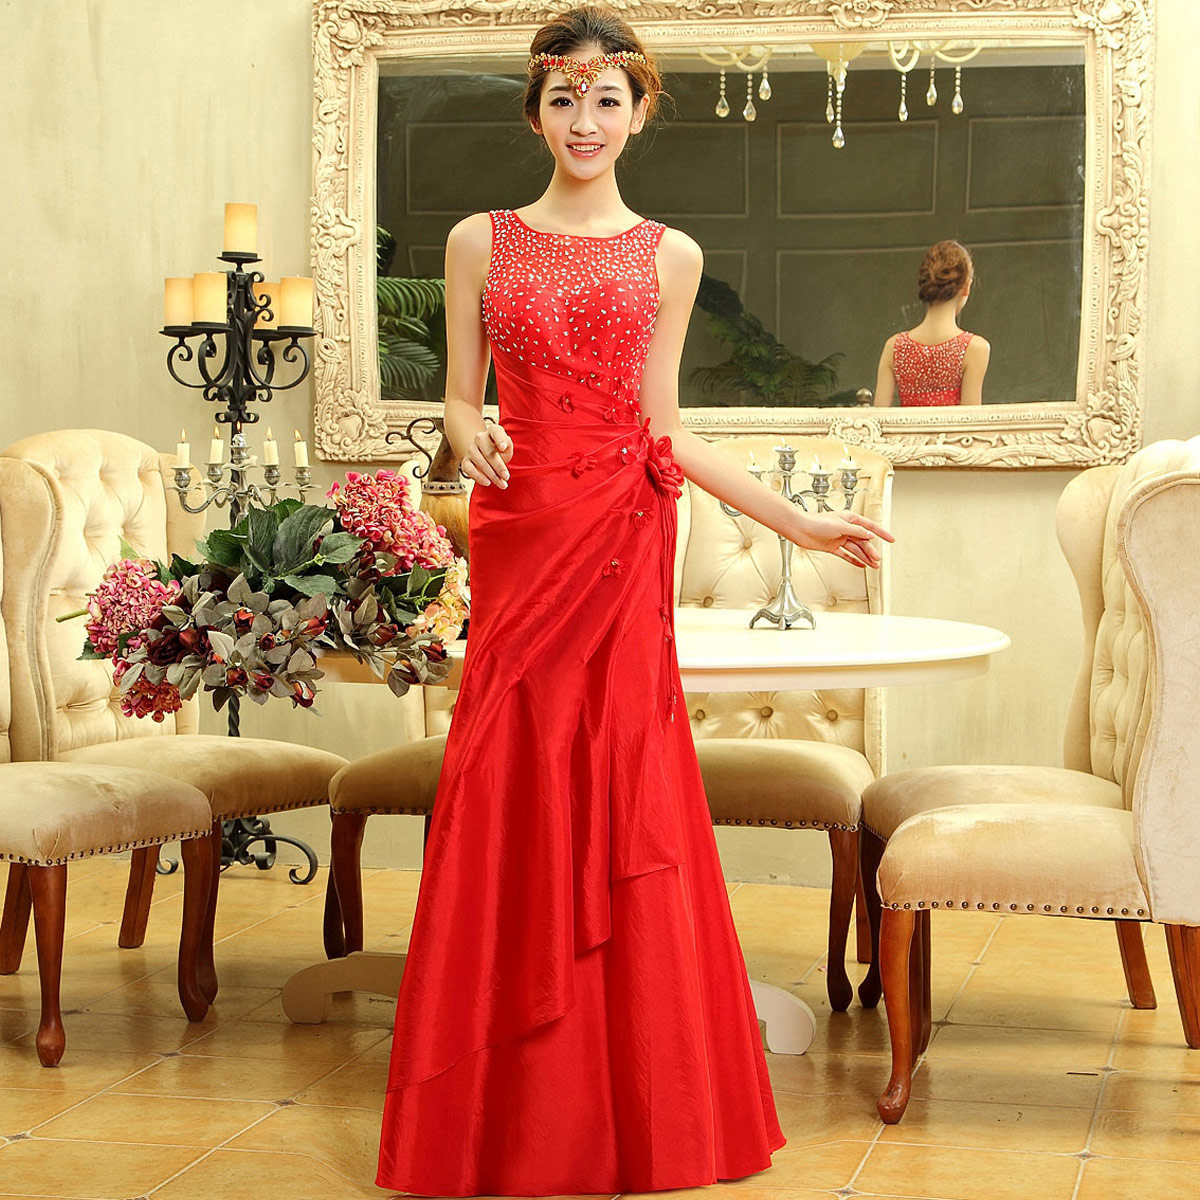 The bride red long design formal dress 2013 beads evening dress the bride double-shoulder slim evening dress